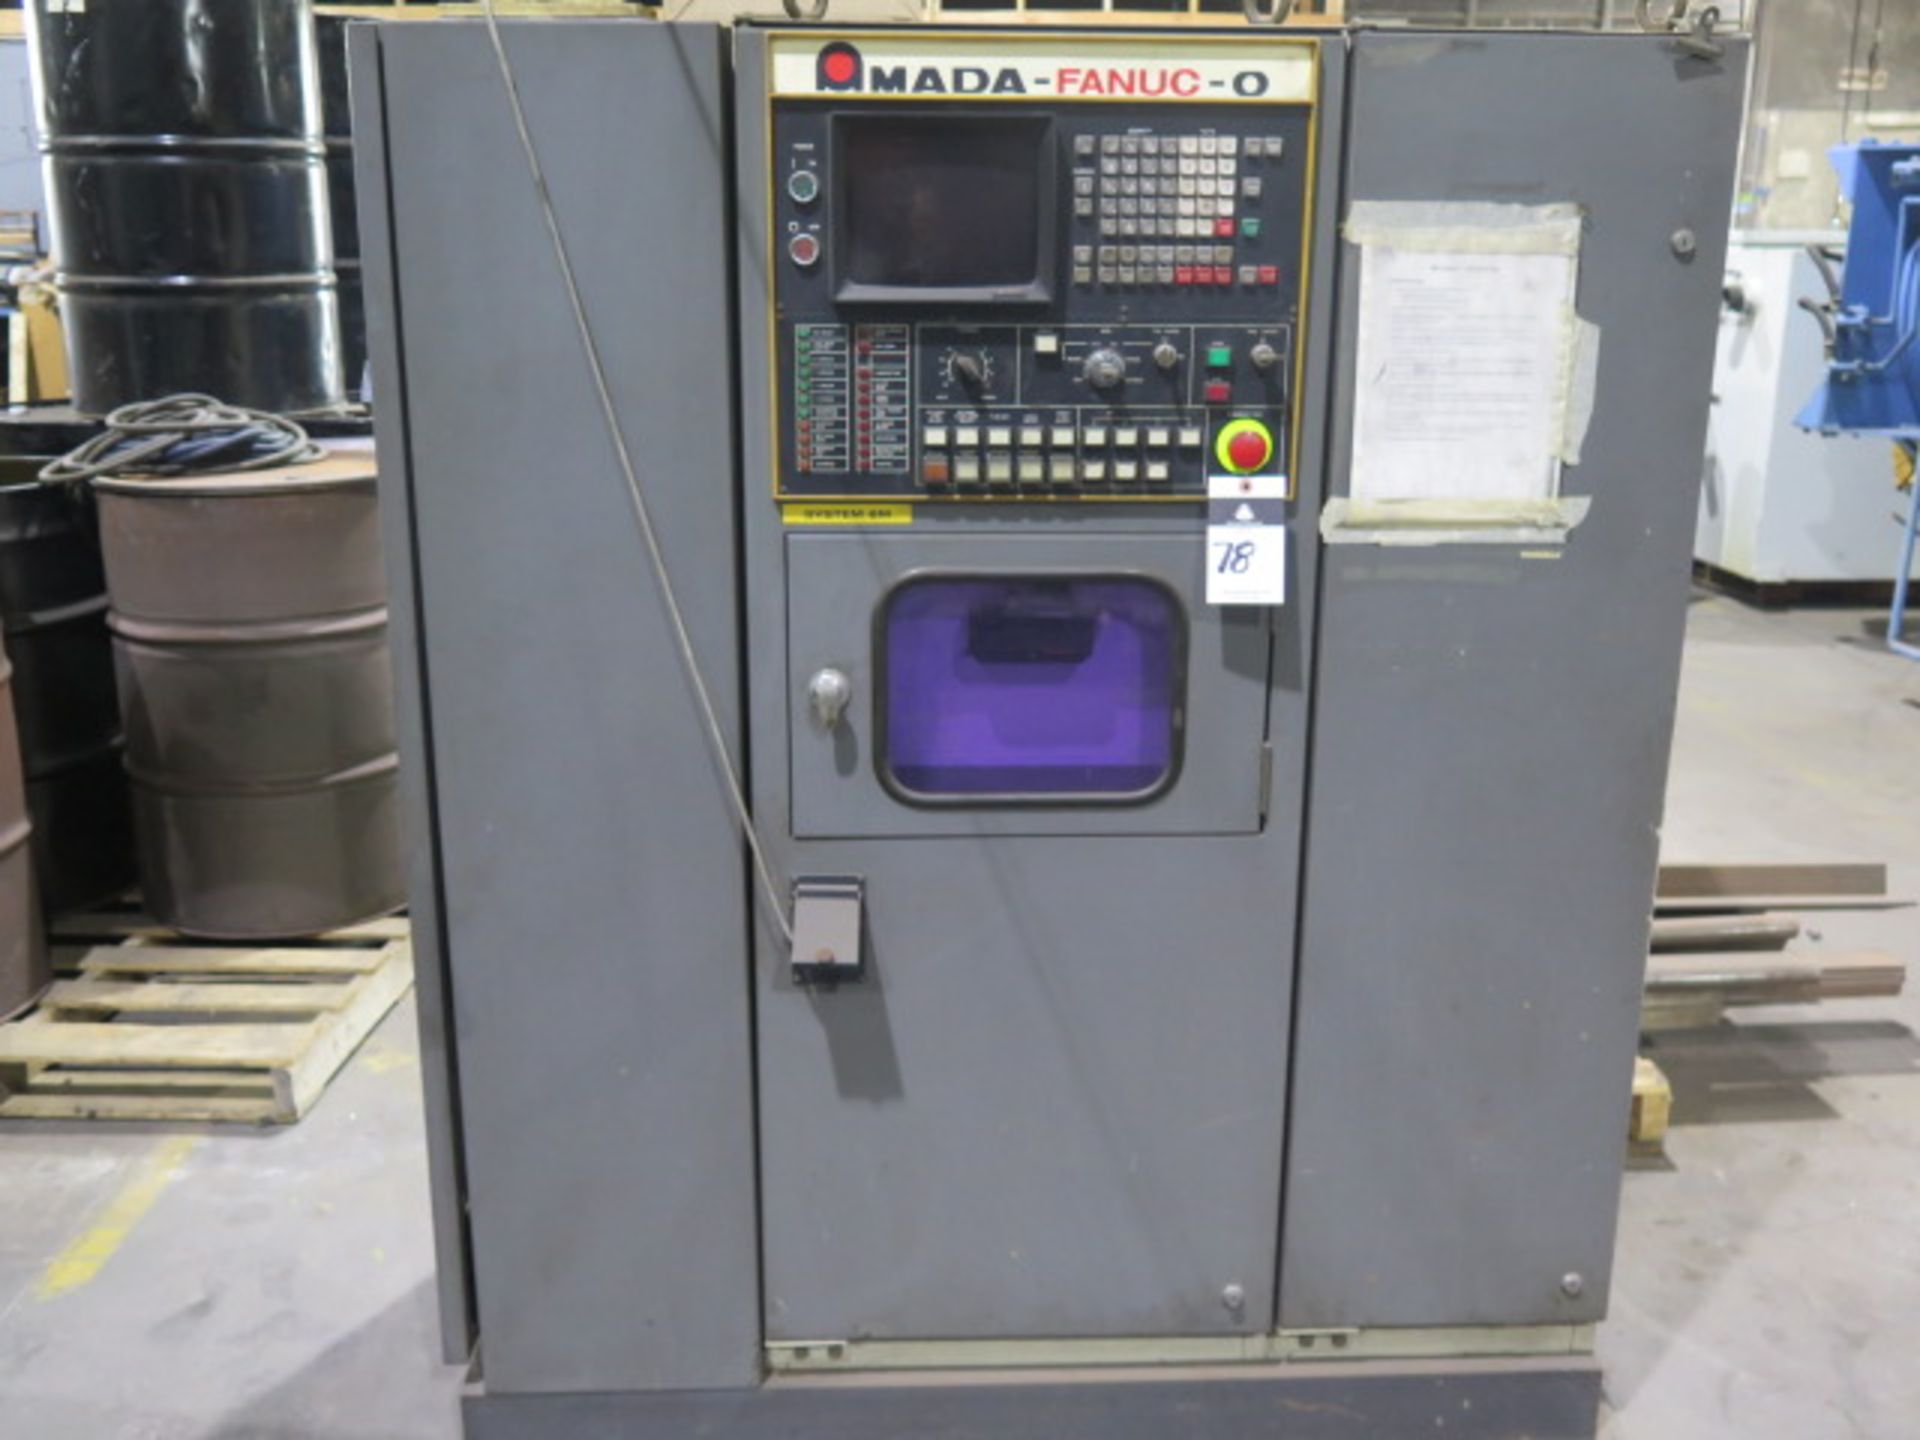 Amada OCTO 30-30-40 30-Ton 8-Station CNC Inline Punch Press s/n 3340509 w/ Amada-Fanuc-0 System 6M - Image 9 of 11